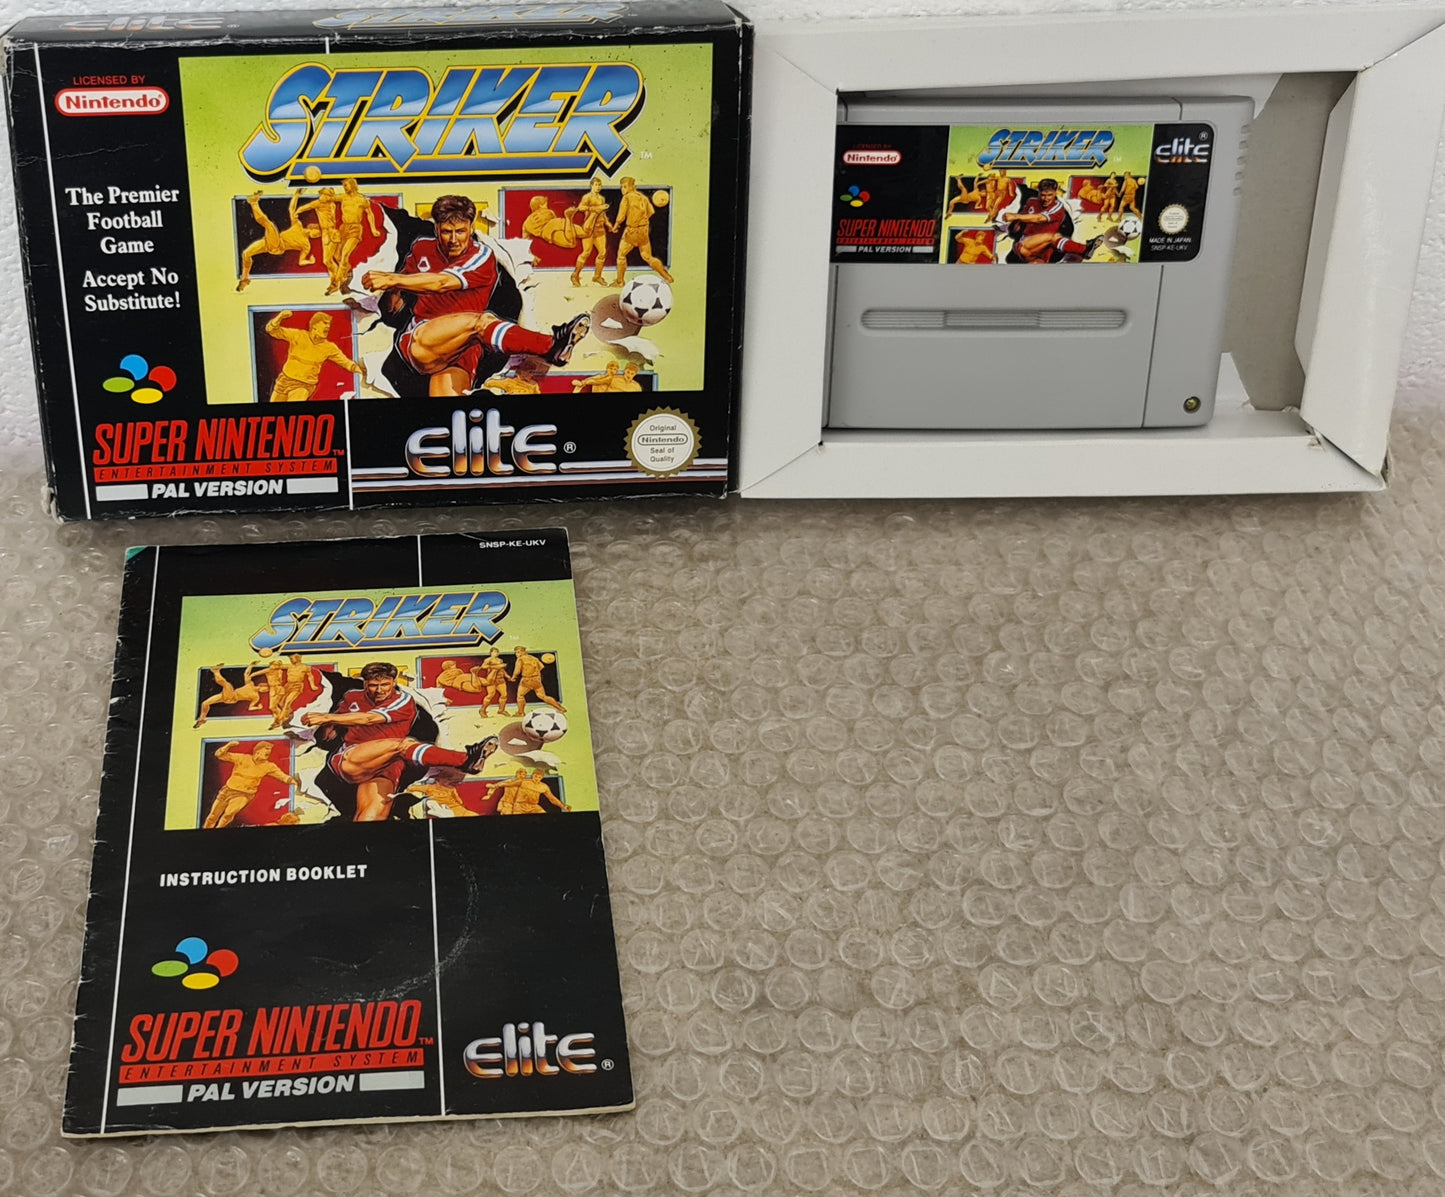 Striker Super Nintendo Entertainment System (SNES) Game